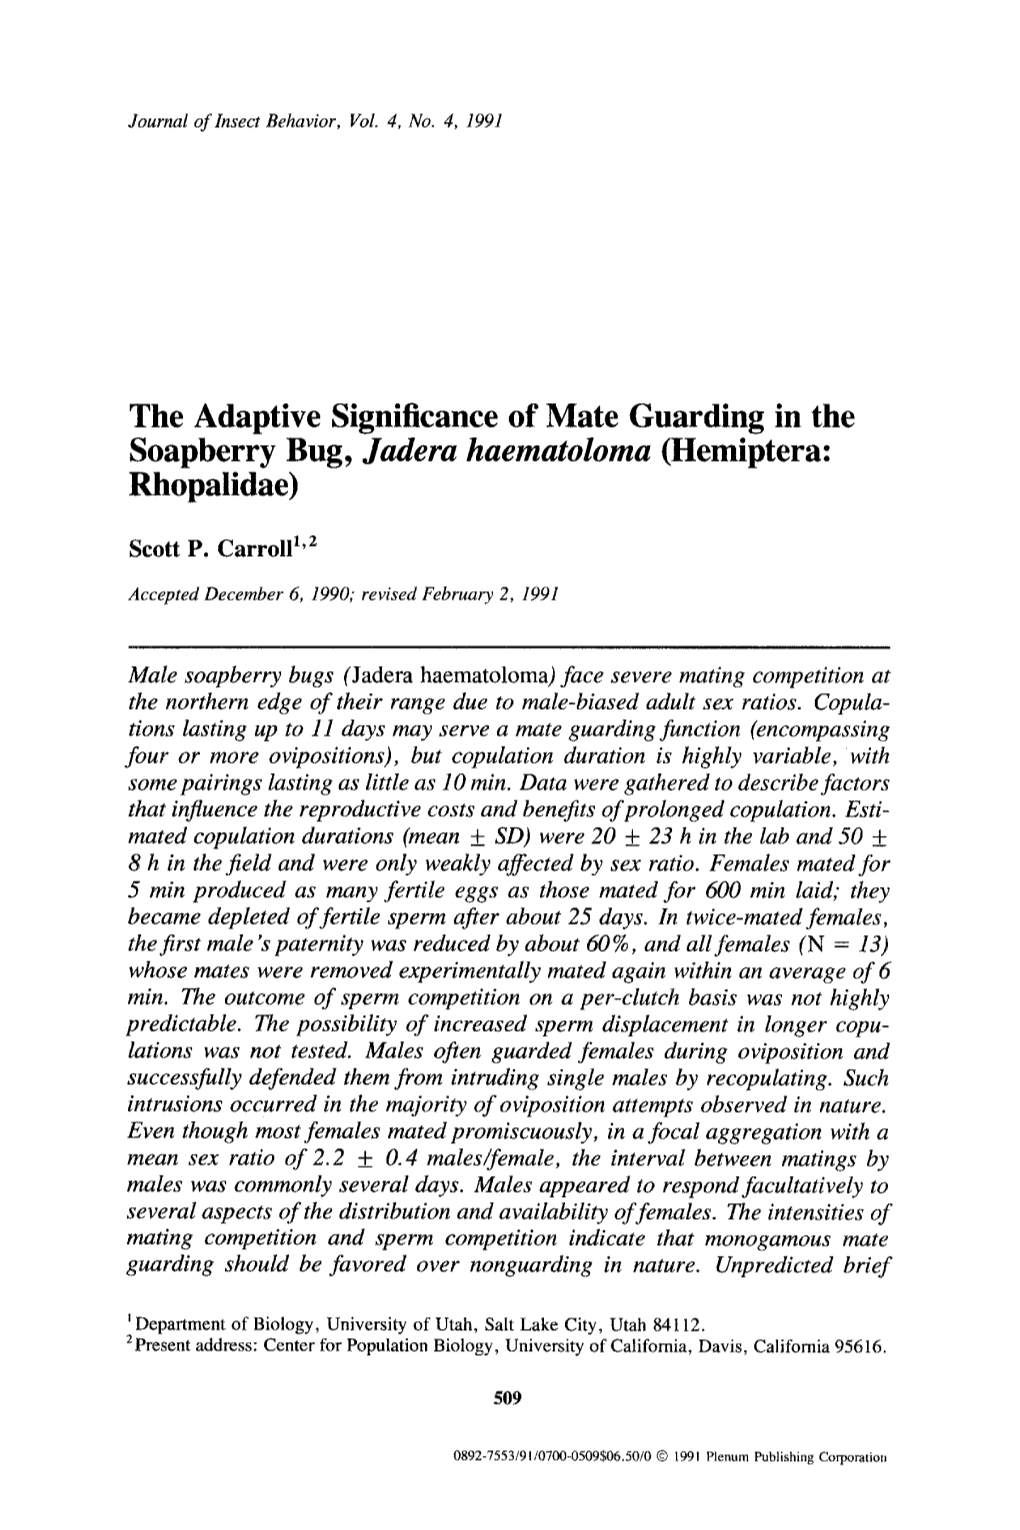 The Adaptive Significance of Mate Guarding in the Soapberry Bug, Jadera Haematoloma (Hemiptera: Rhopalidae)